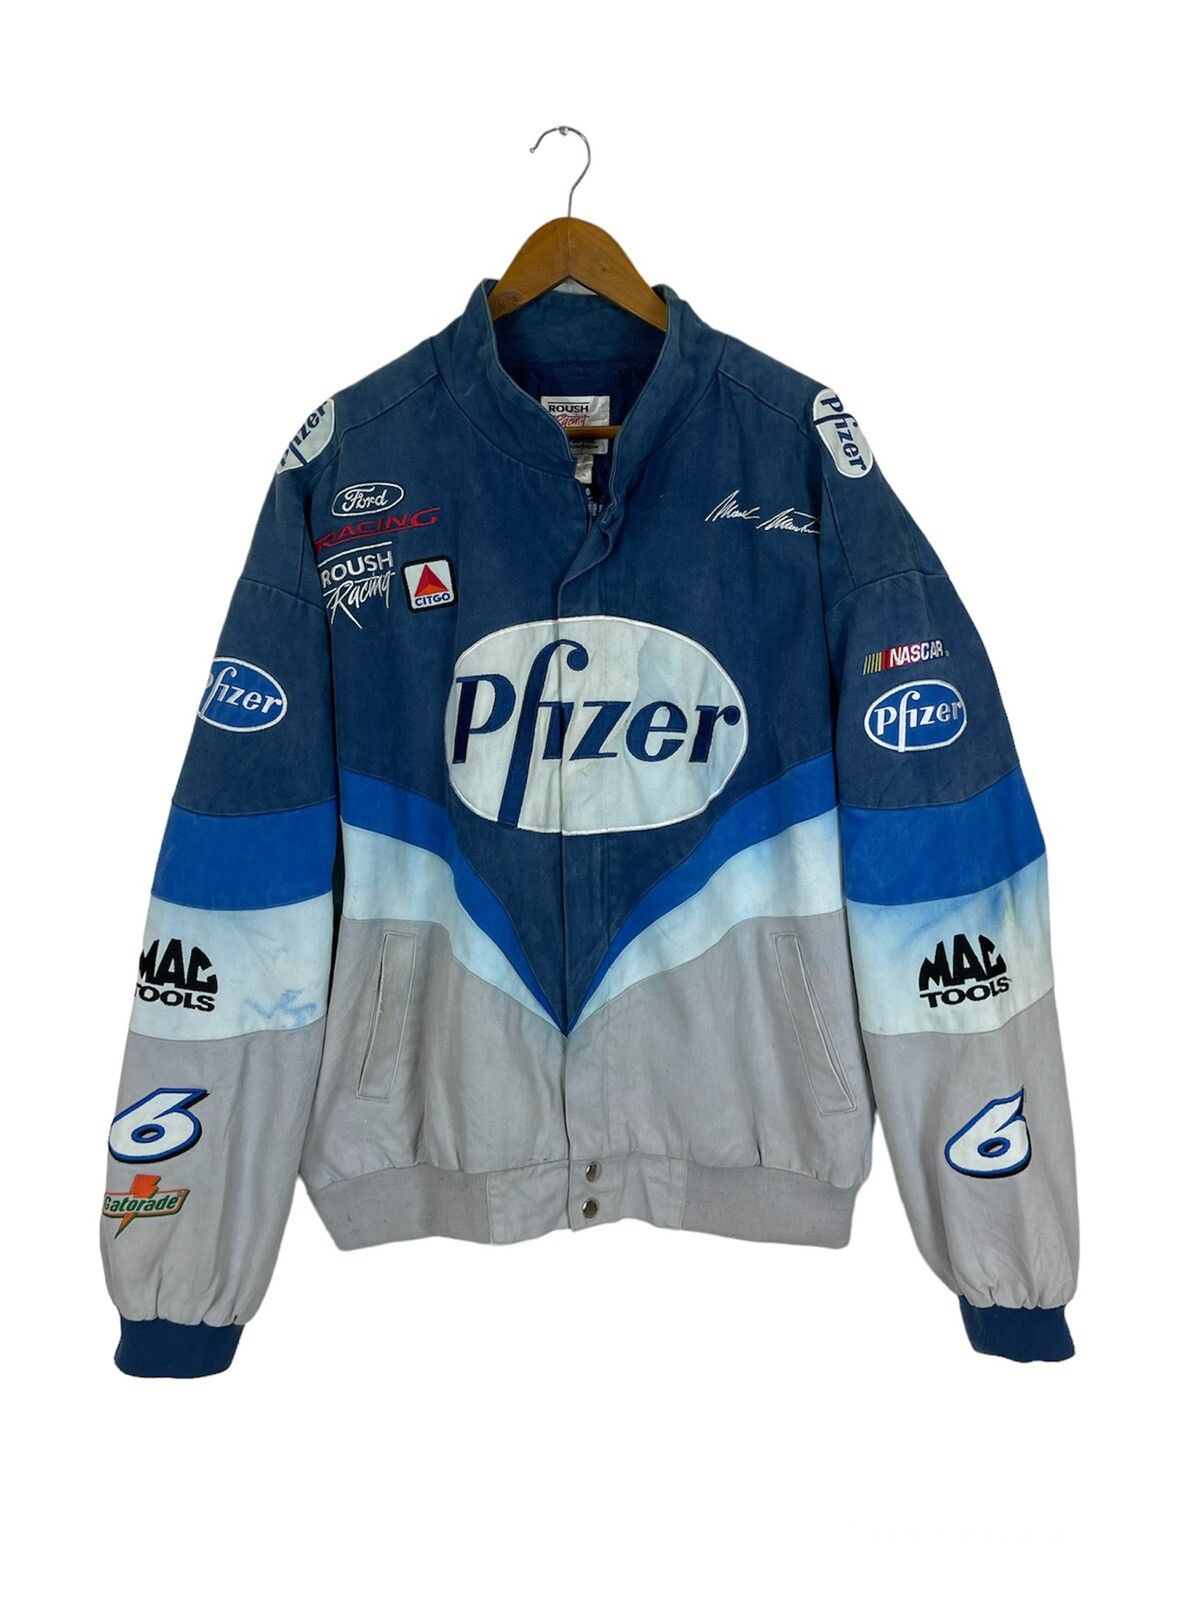 Pfizer Racing Jacket | Grailed